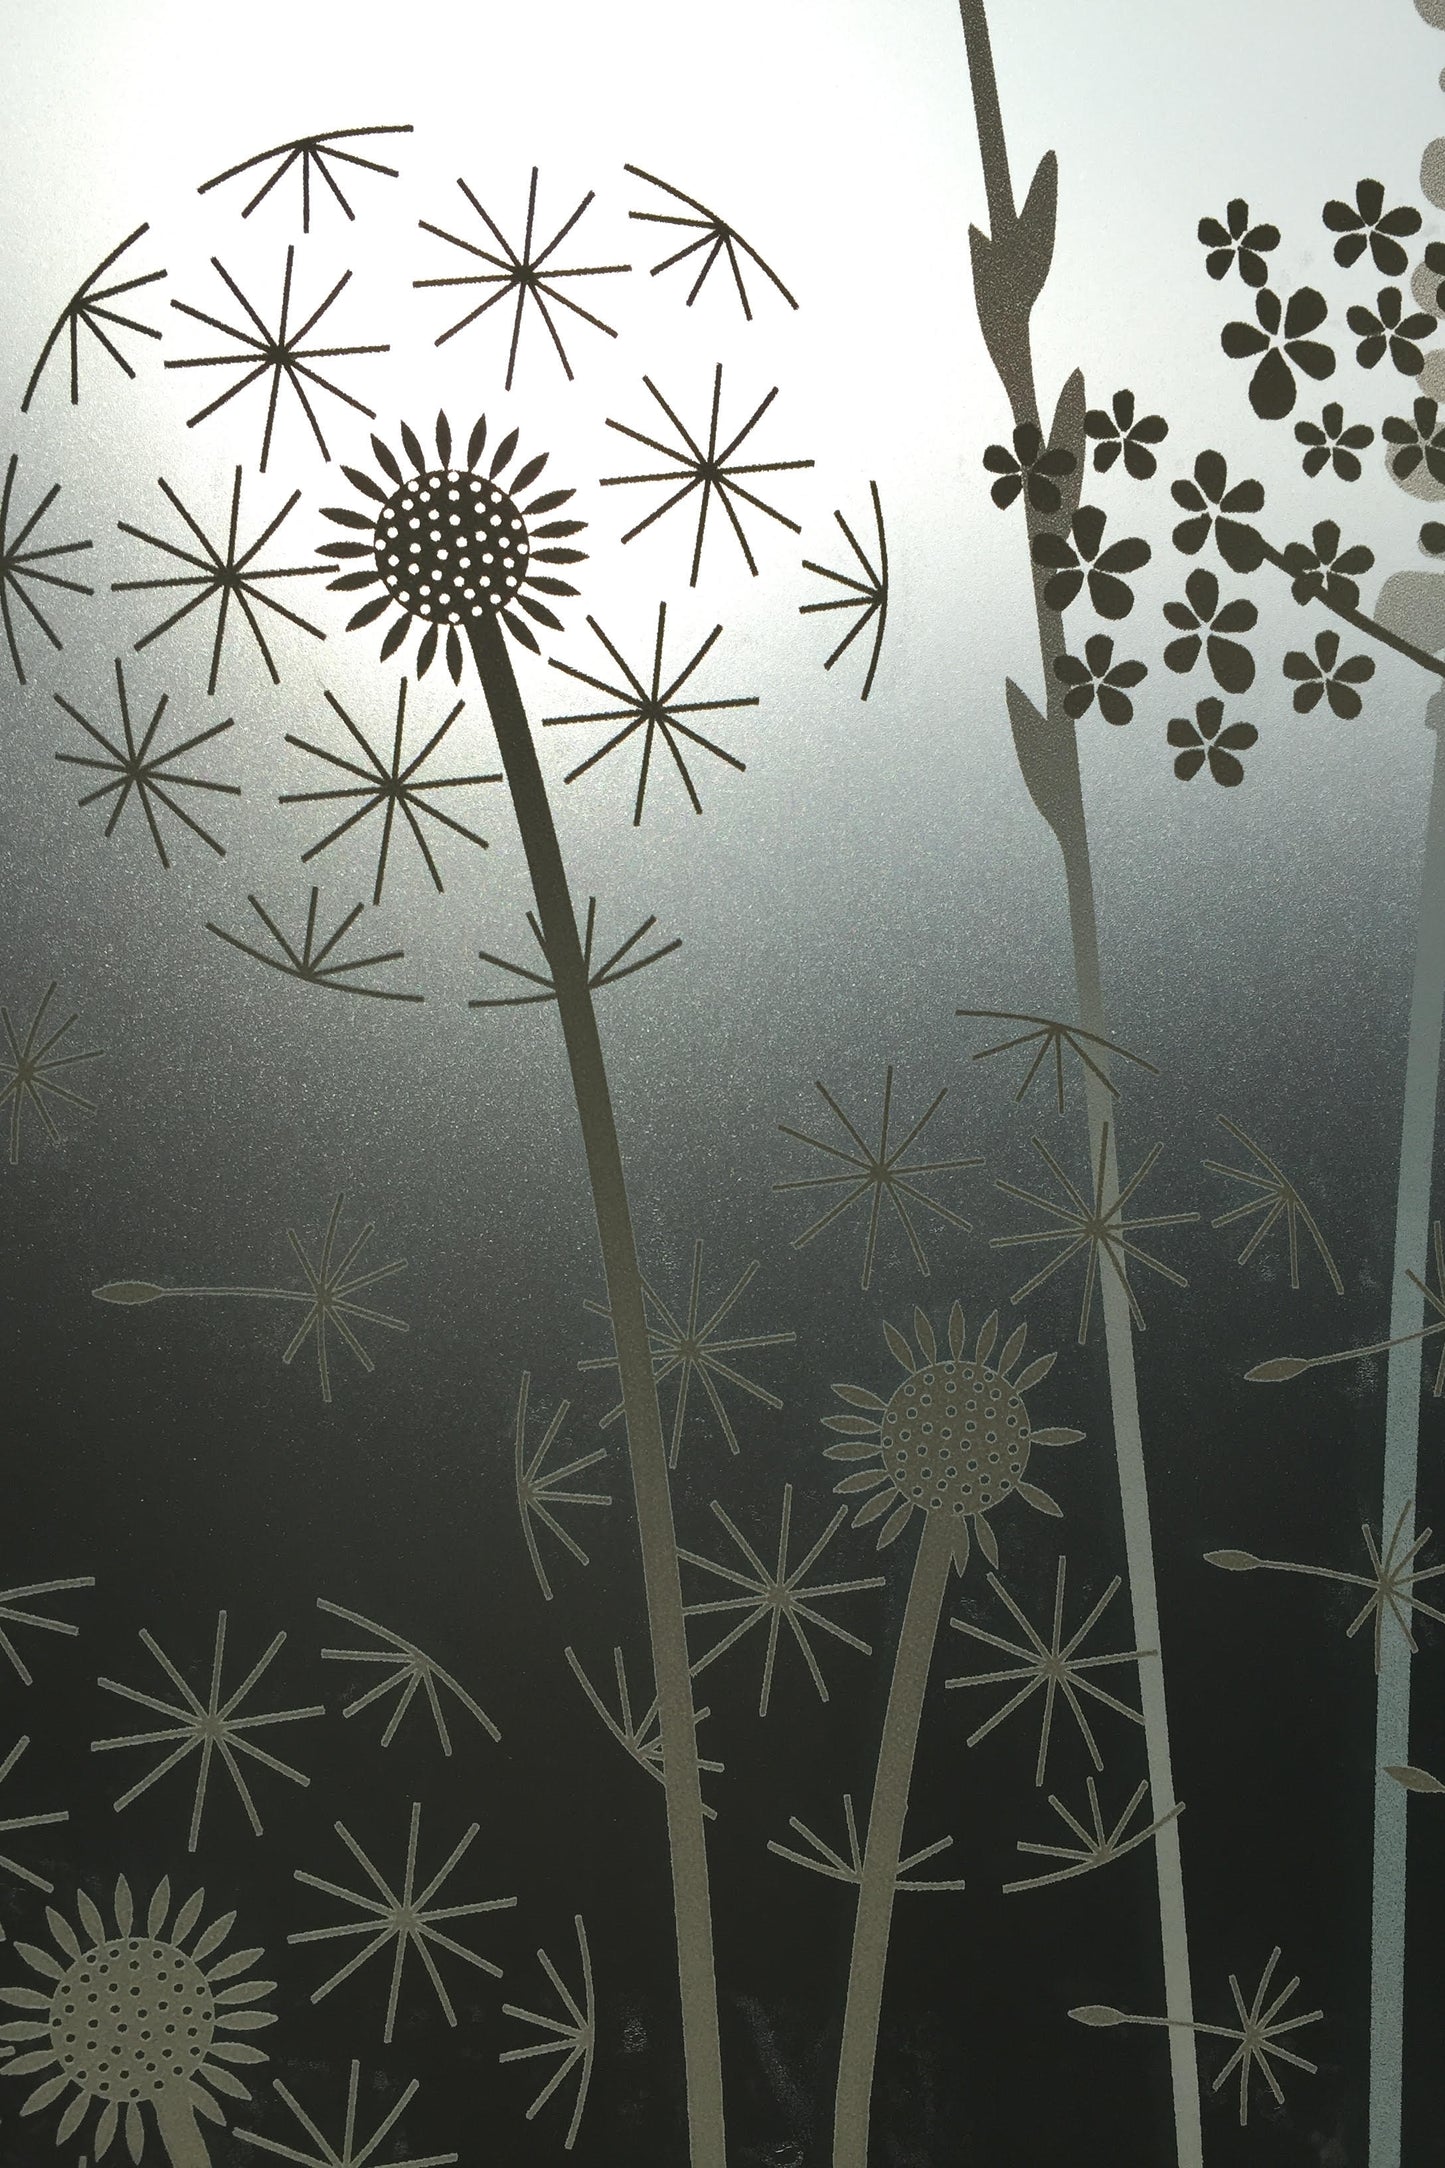 Paper Meadow's Edge Window Film